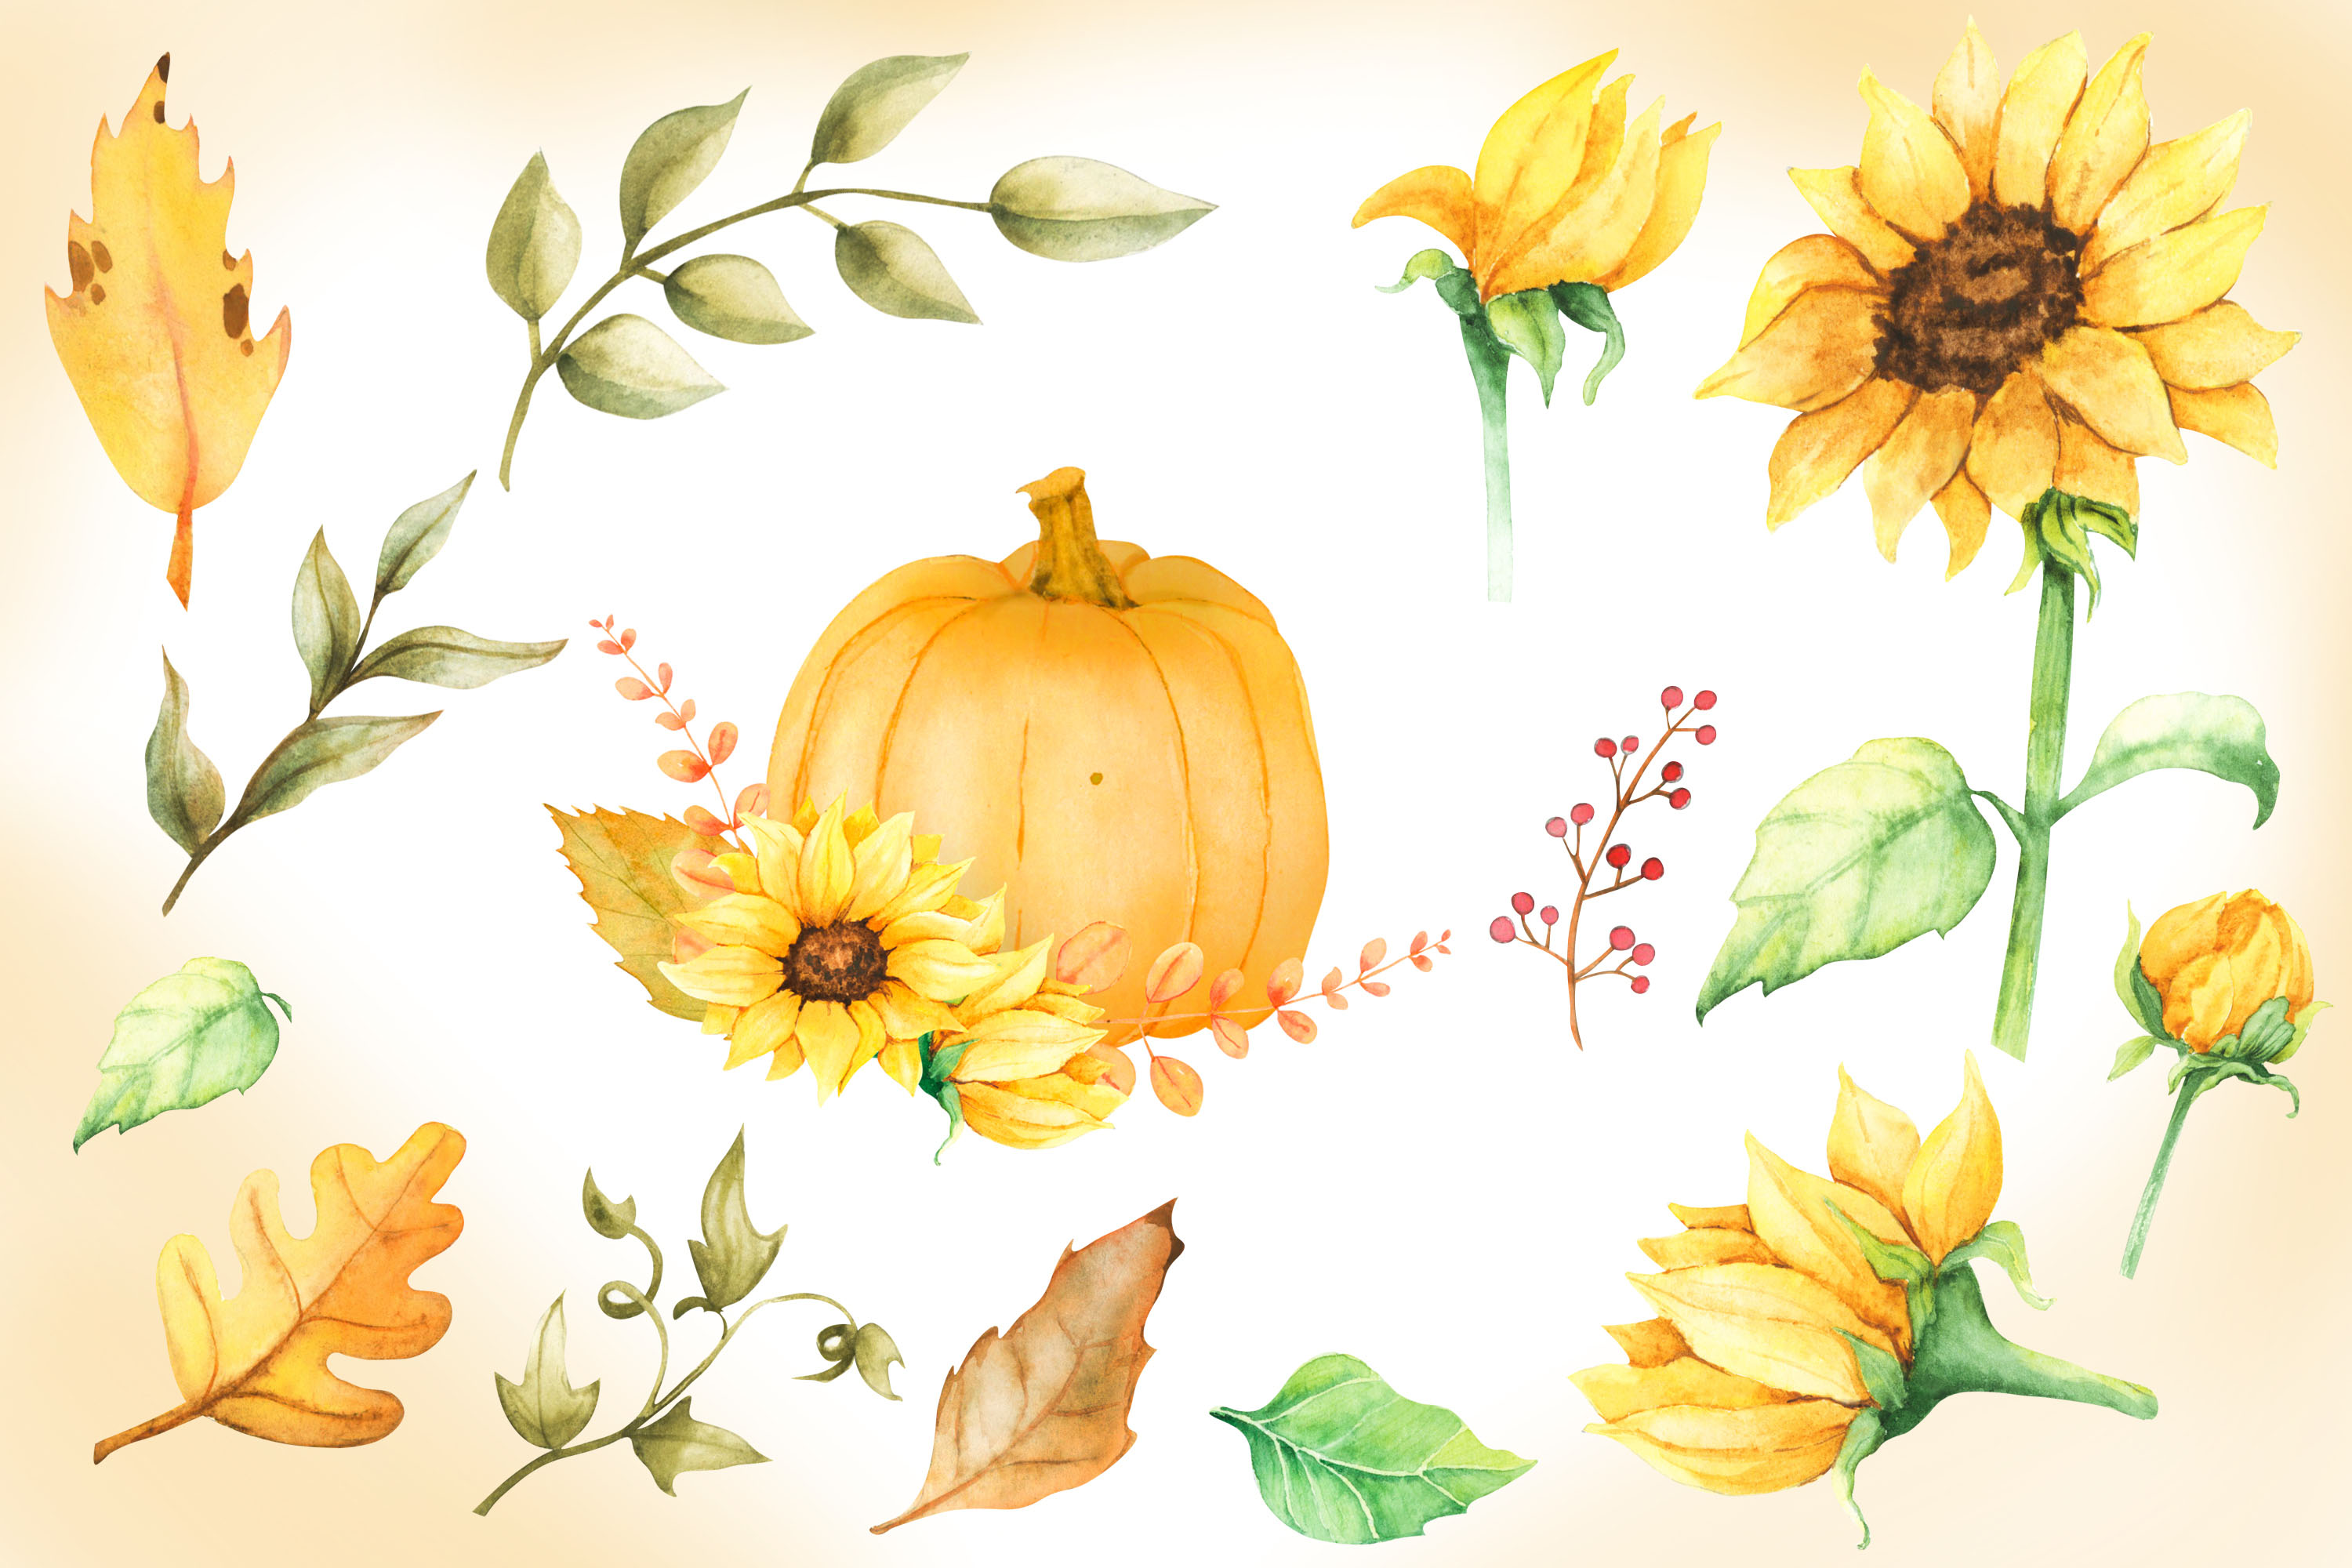 Pumpkins Autumn Watercolor Clipart elements.